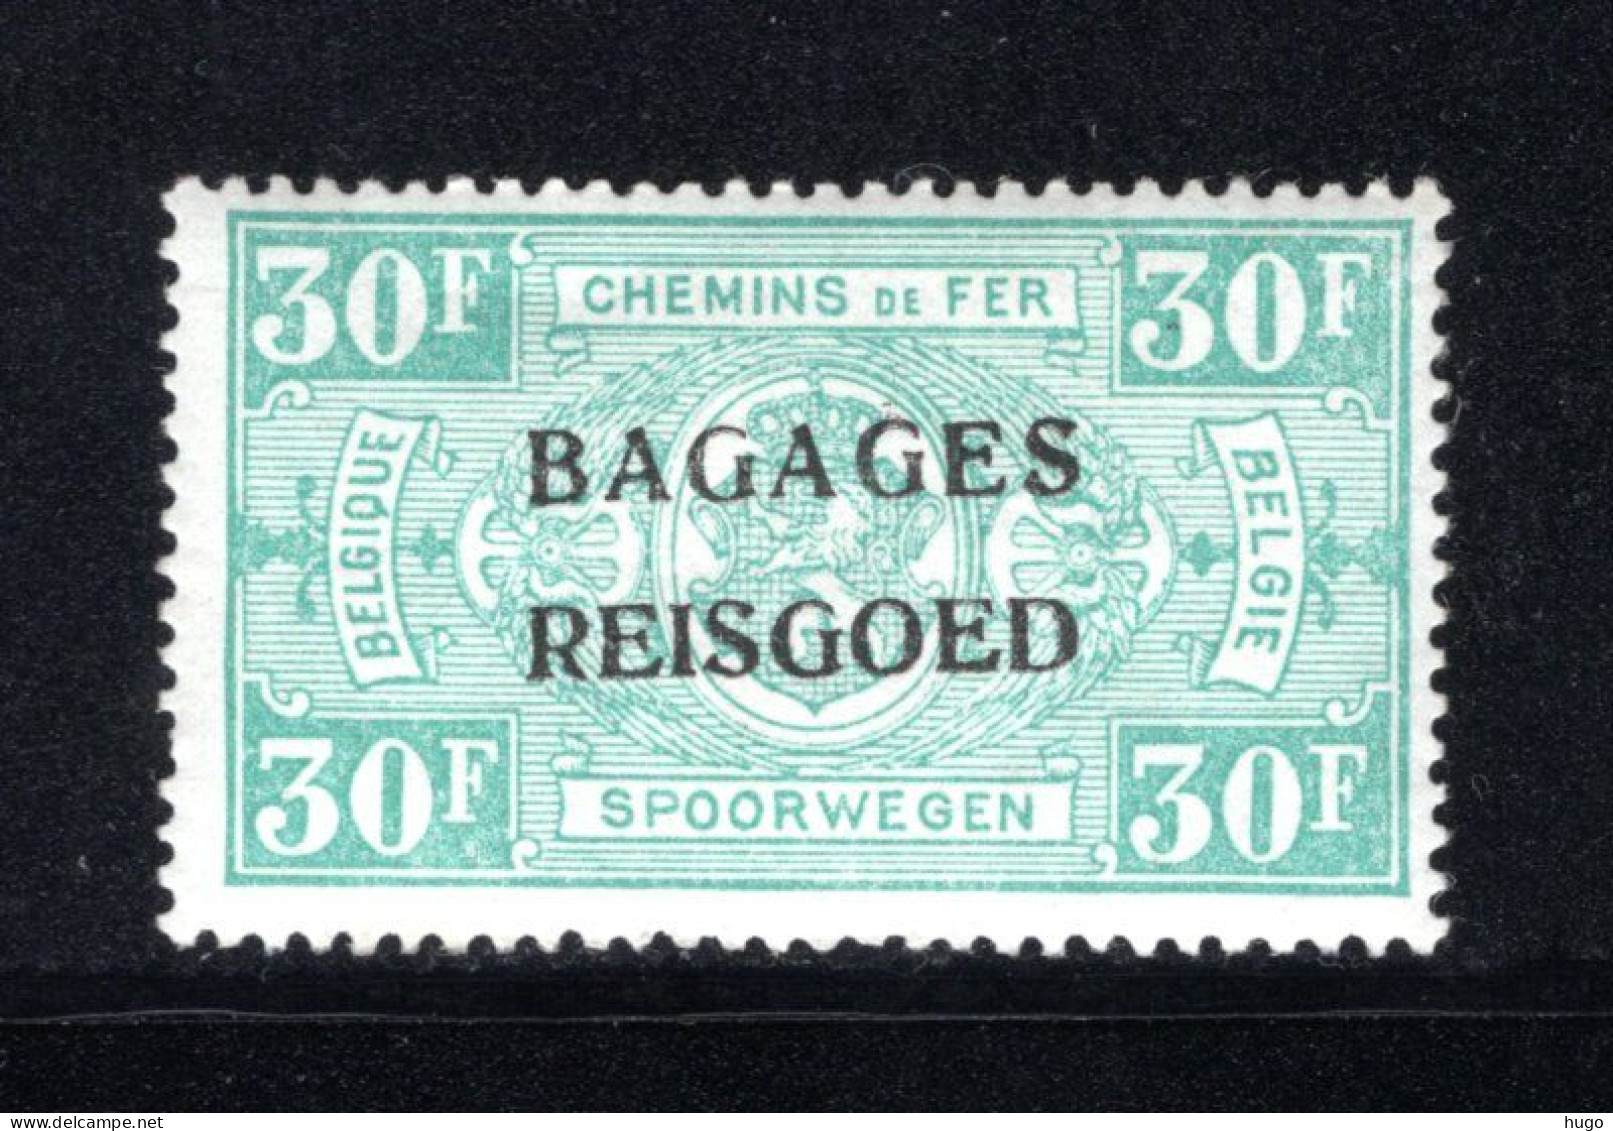 BA21 MNH 1935 - Spoorwegzegels BAGAGES - REISGOED - Bagages [BA]